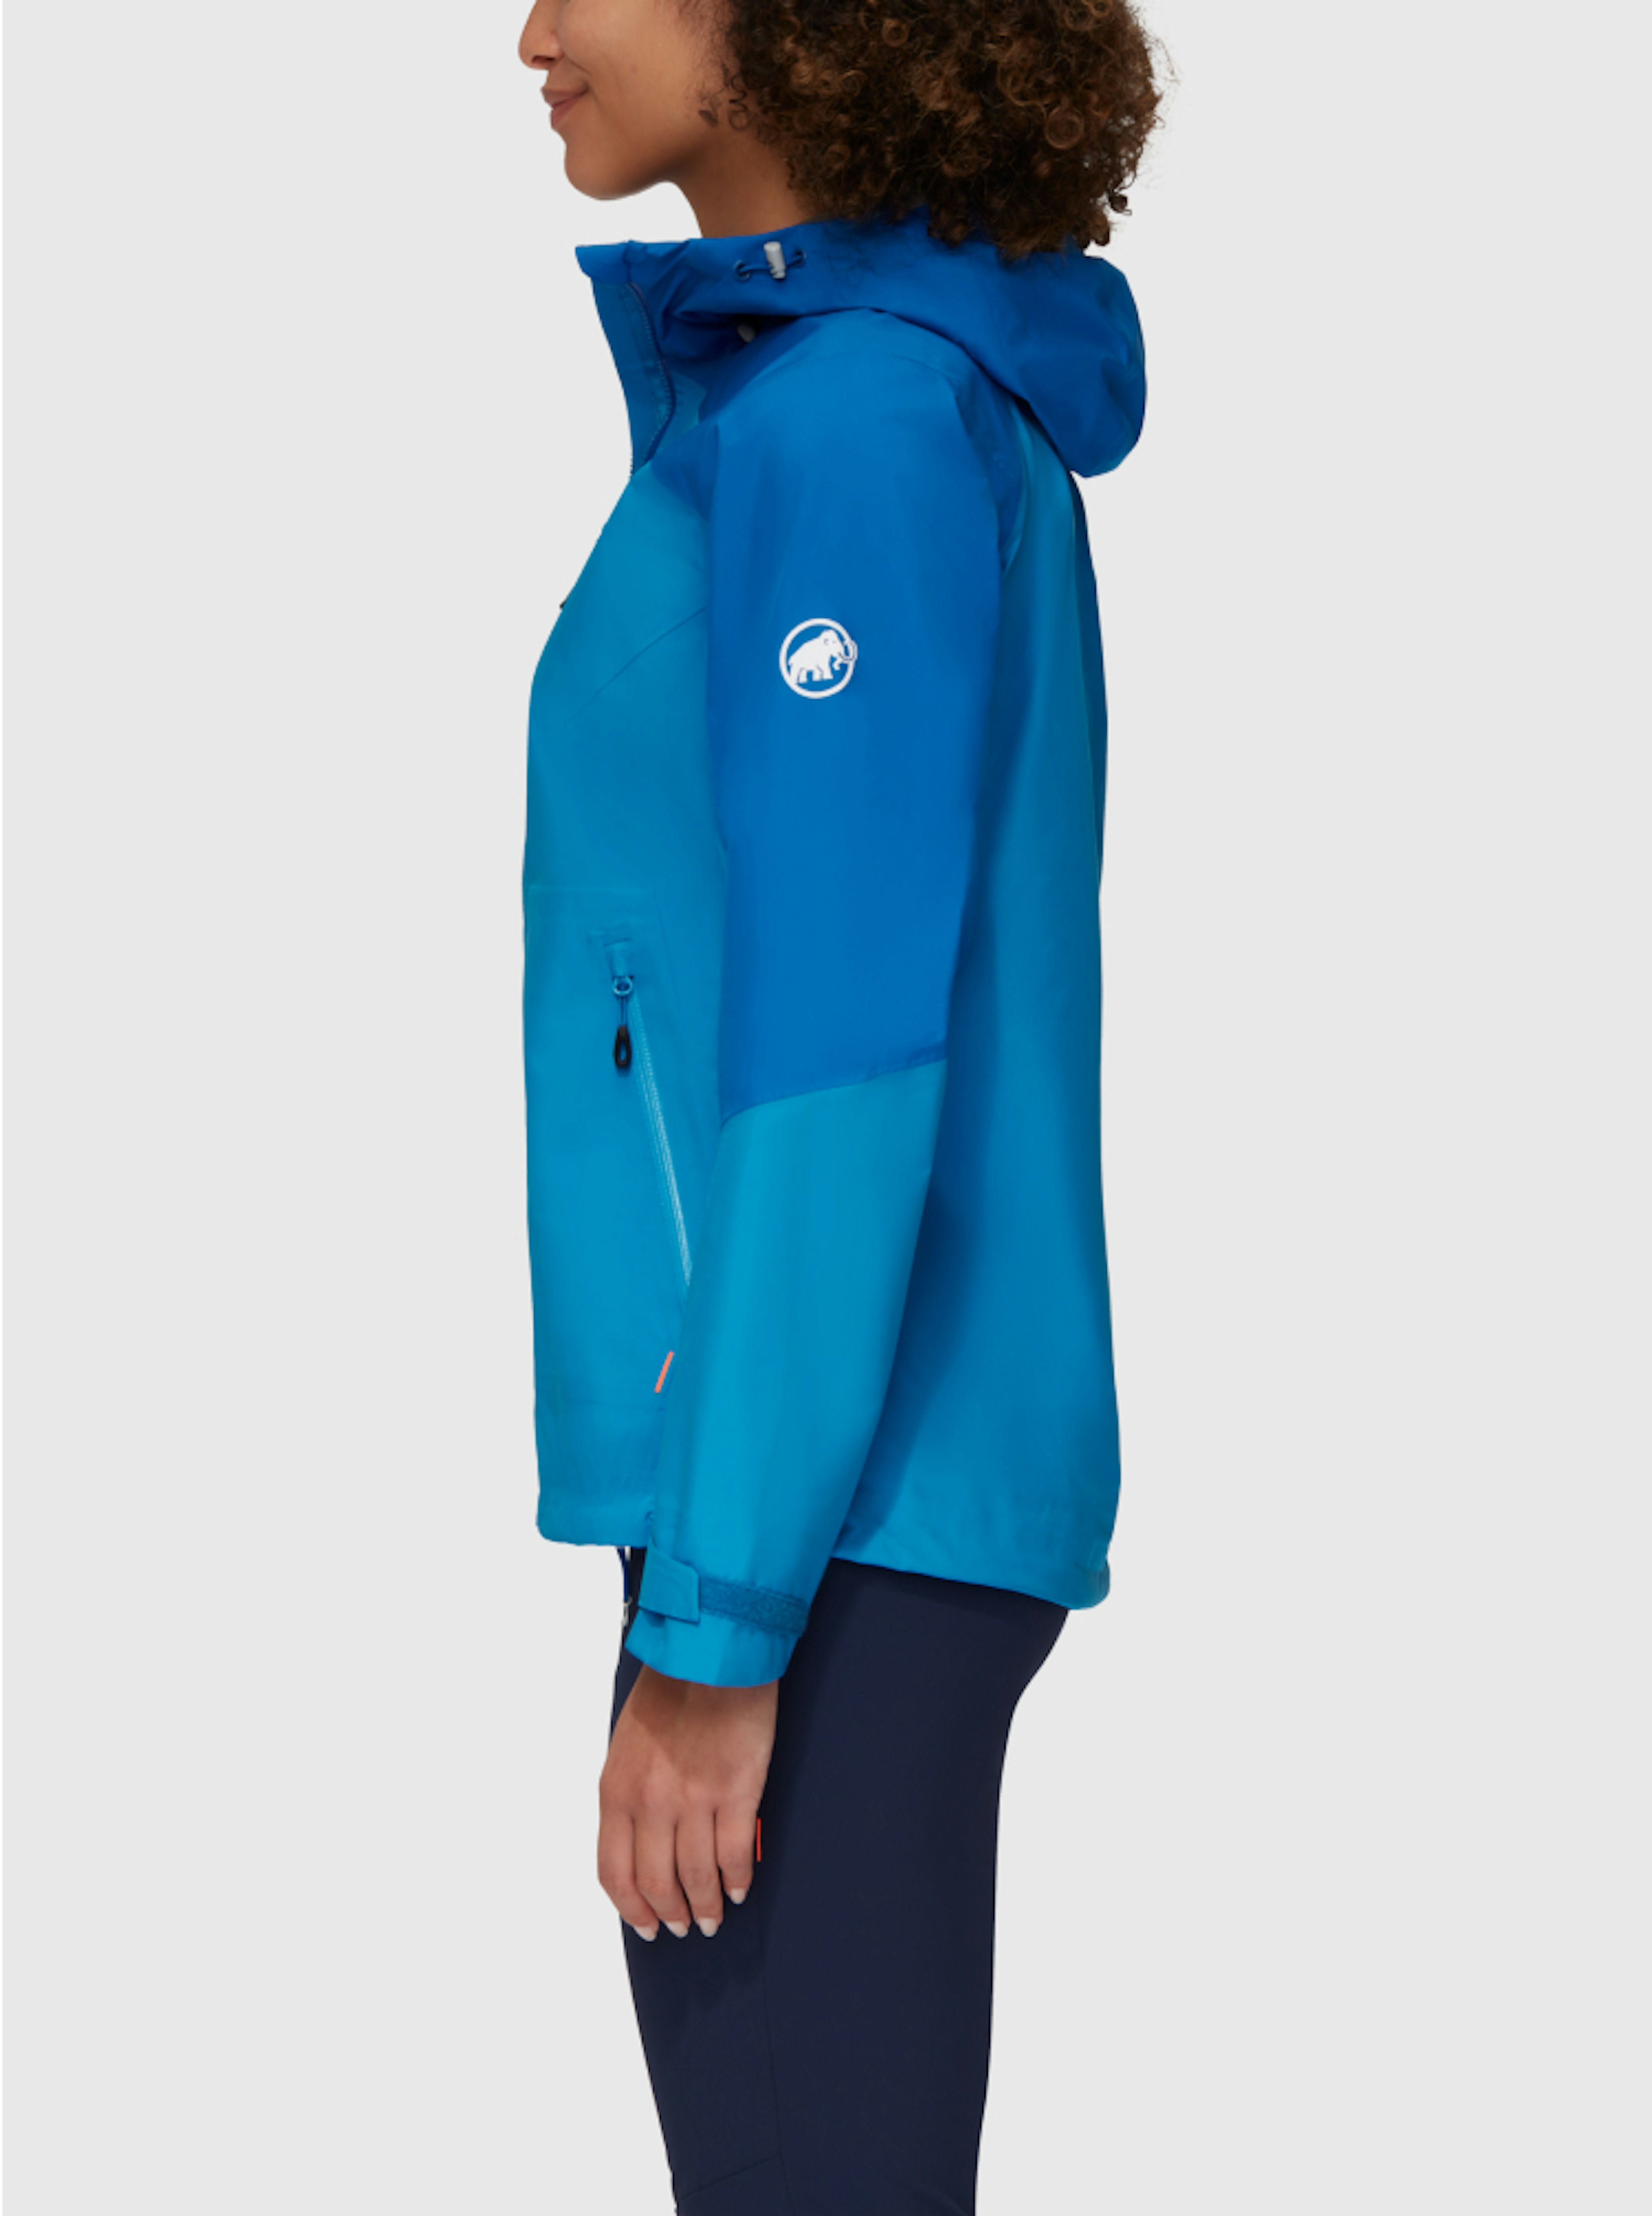 Blue Mammut jacket for women